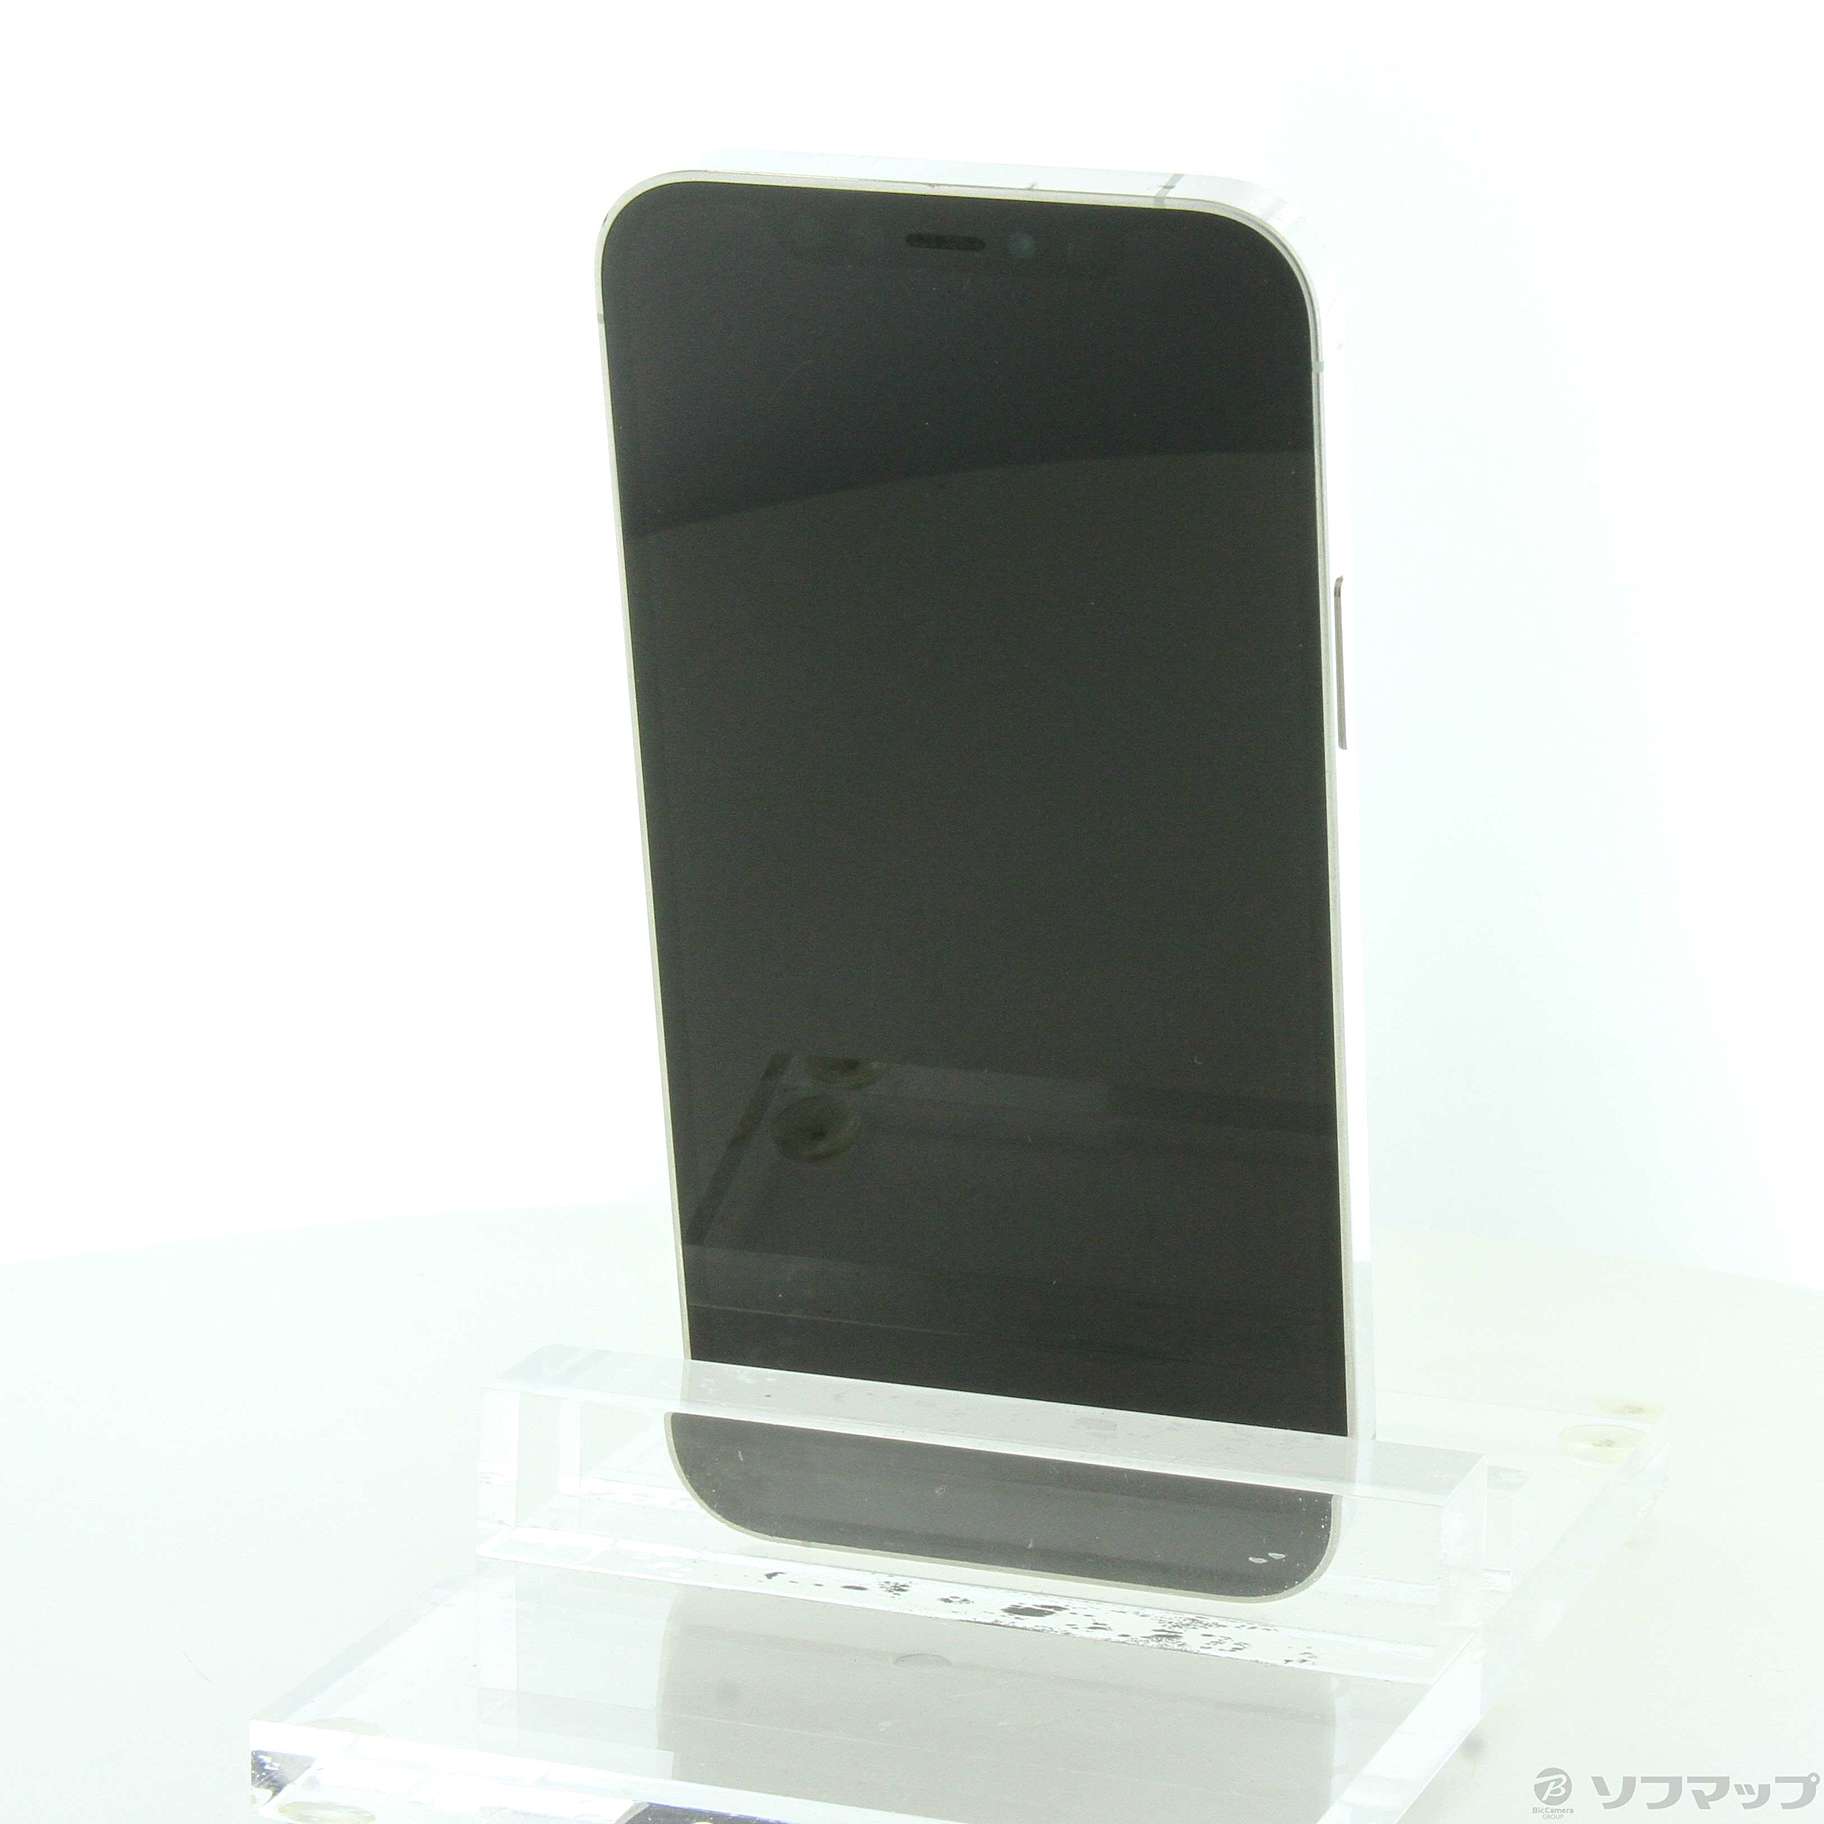 docomo 【SIMロックなし】MGMA3J/A iPhone 12 Pro 256GB シルバー SIM